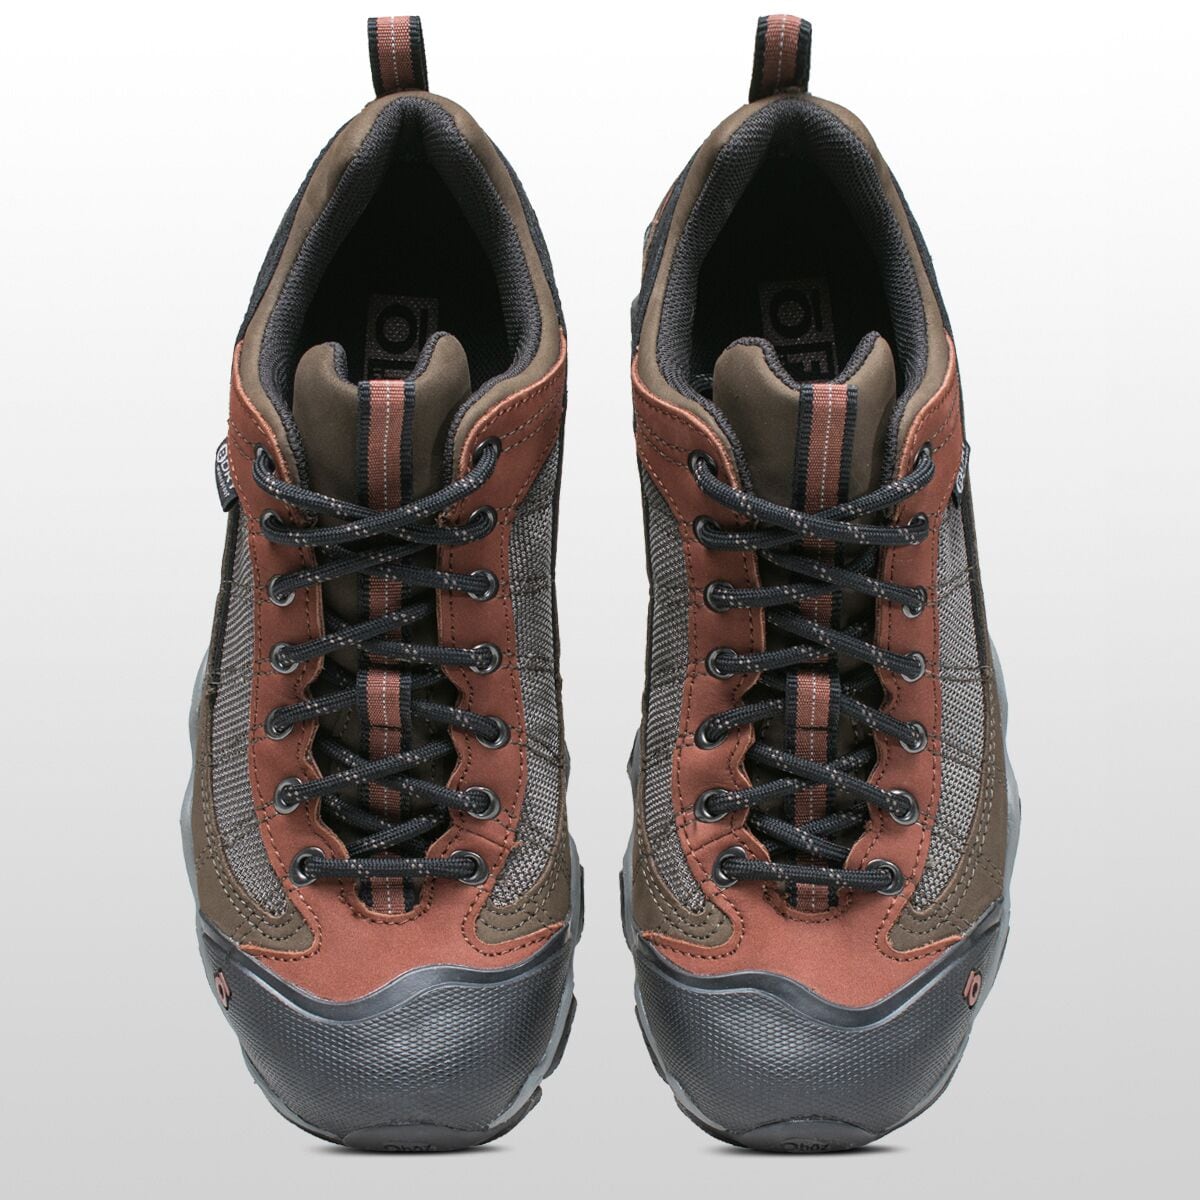 Oboz Firebrand II B-Dry Hiking Shoe - Men's - Footwear